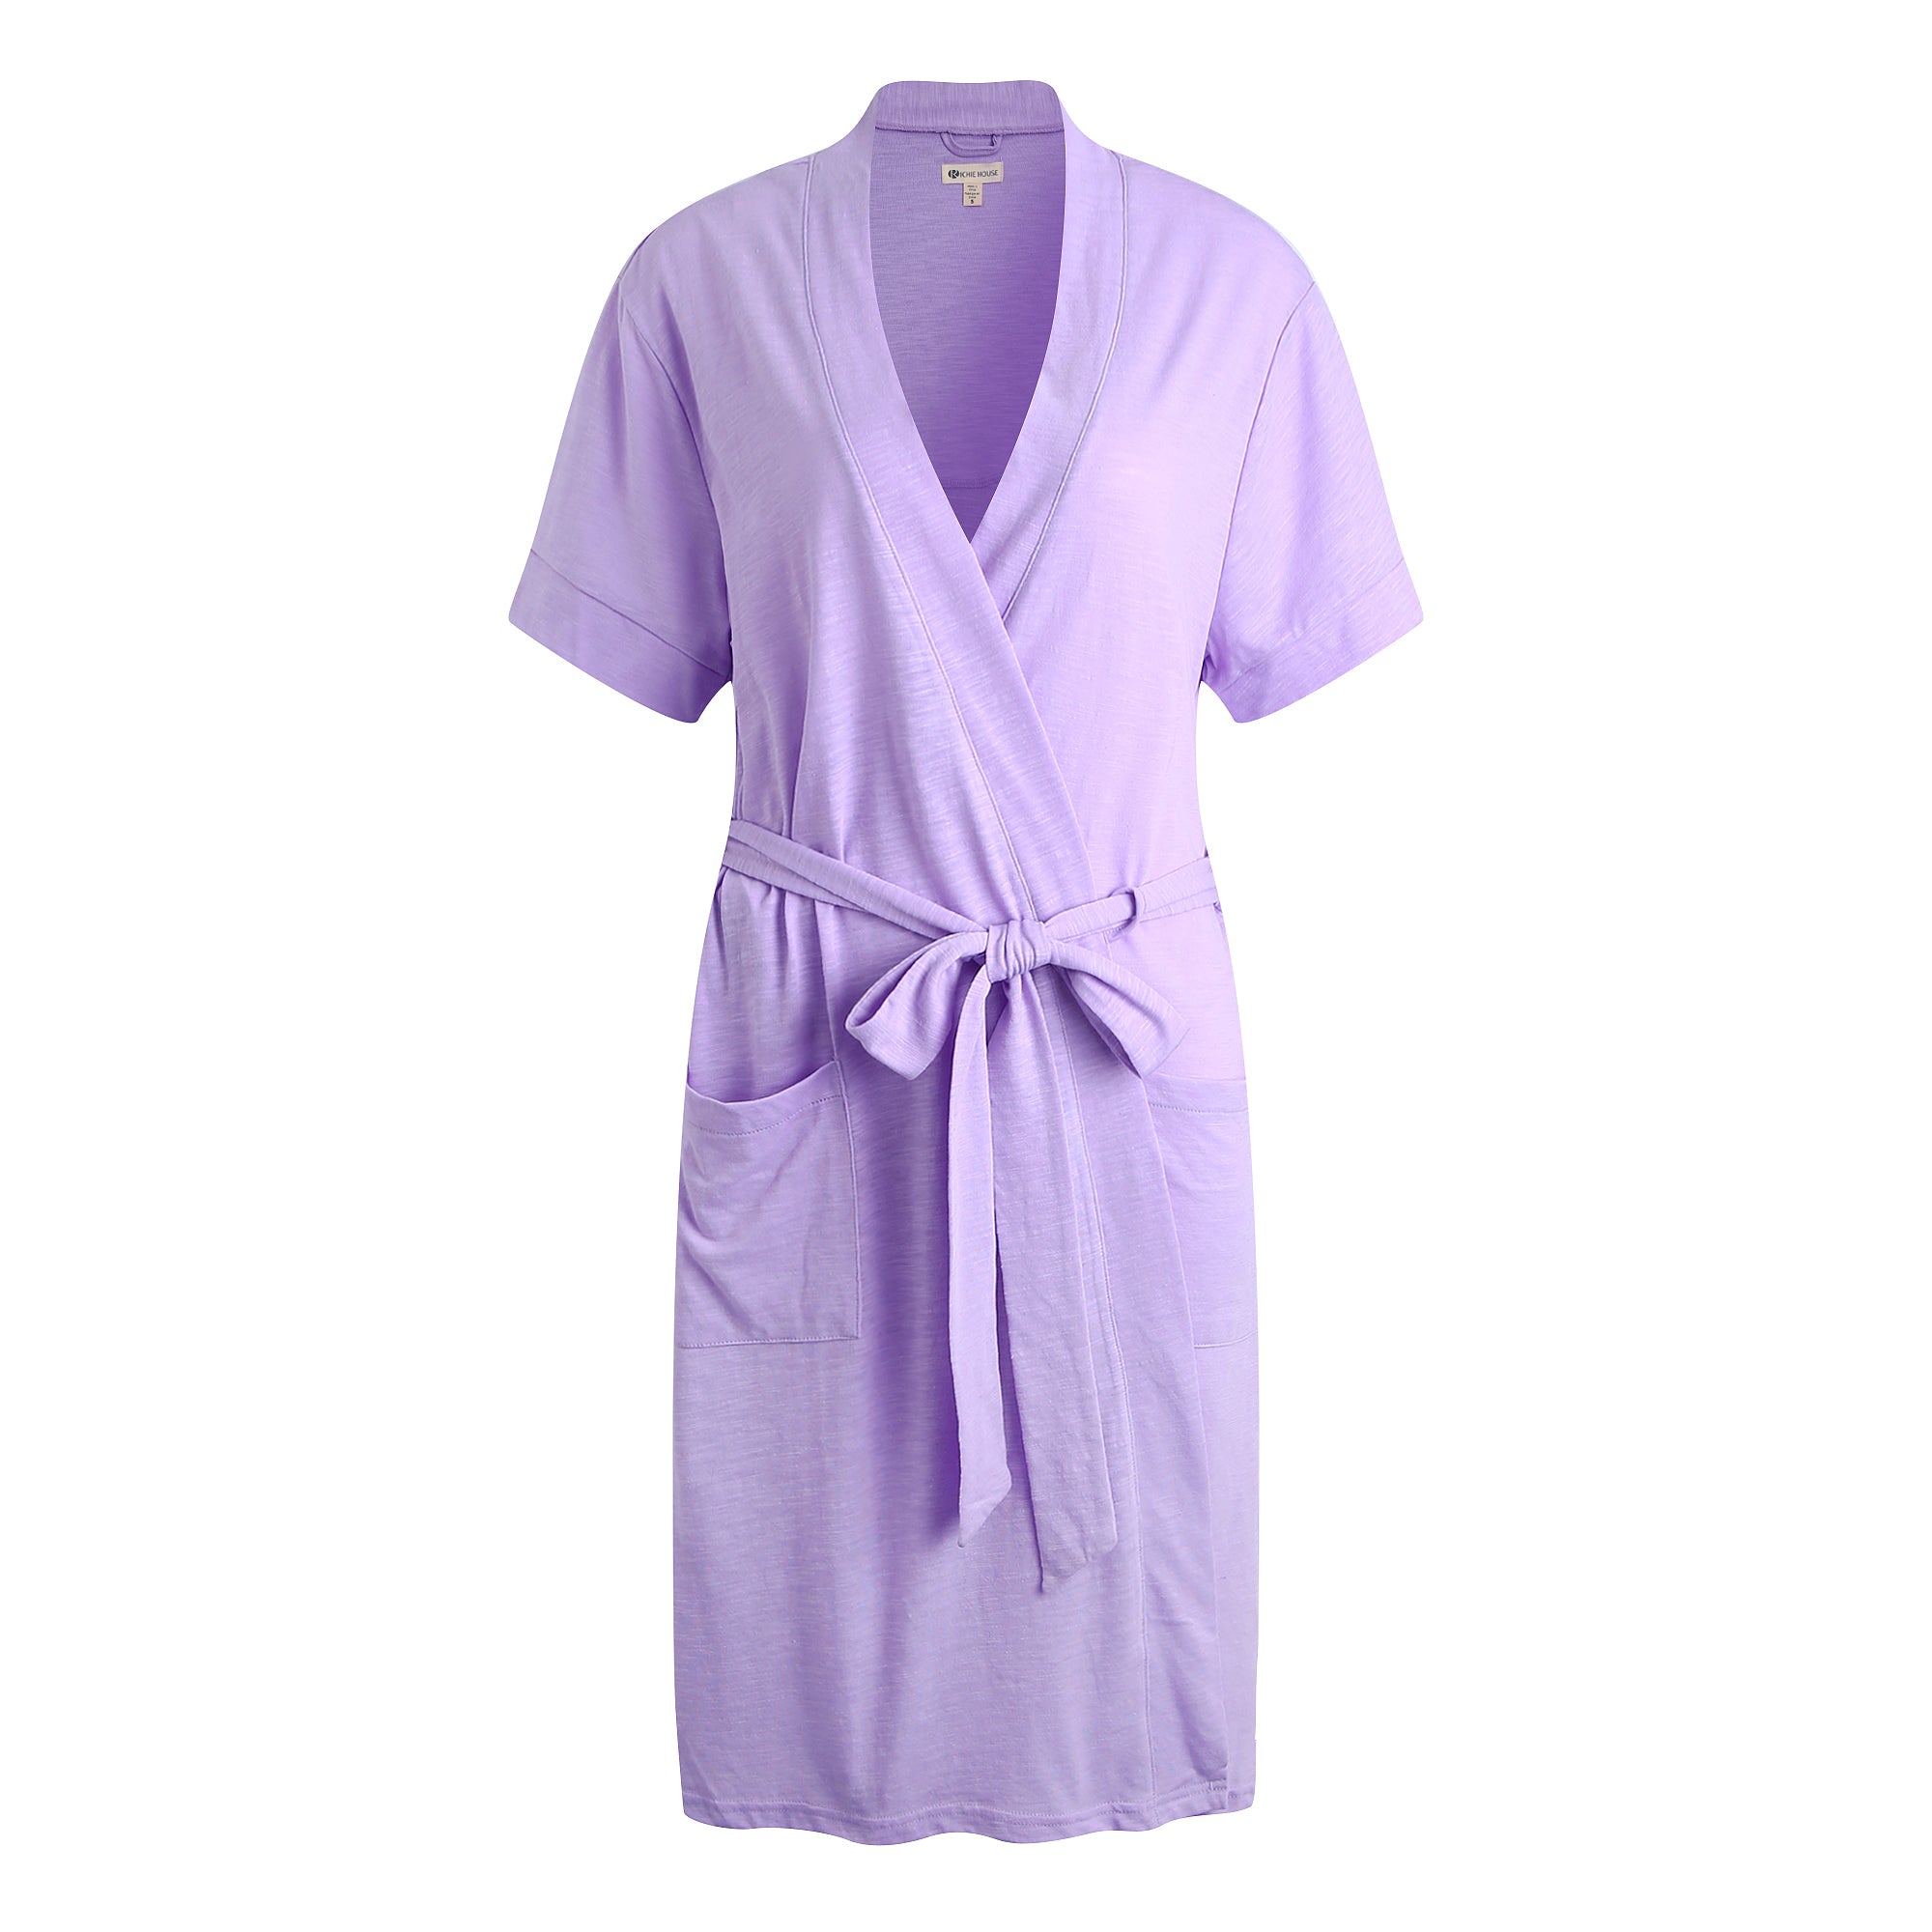 RH Robe Women's Short Sleeve Kimono Cotton Bathrobe Dressing Gown